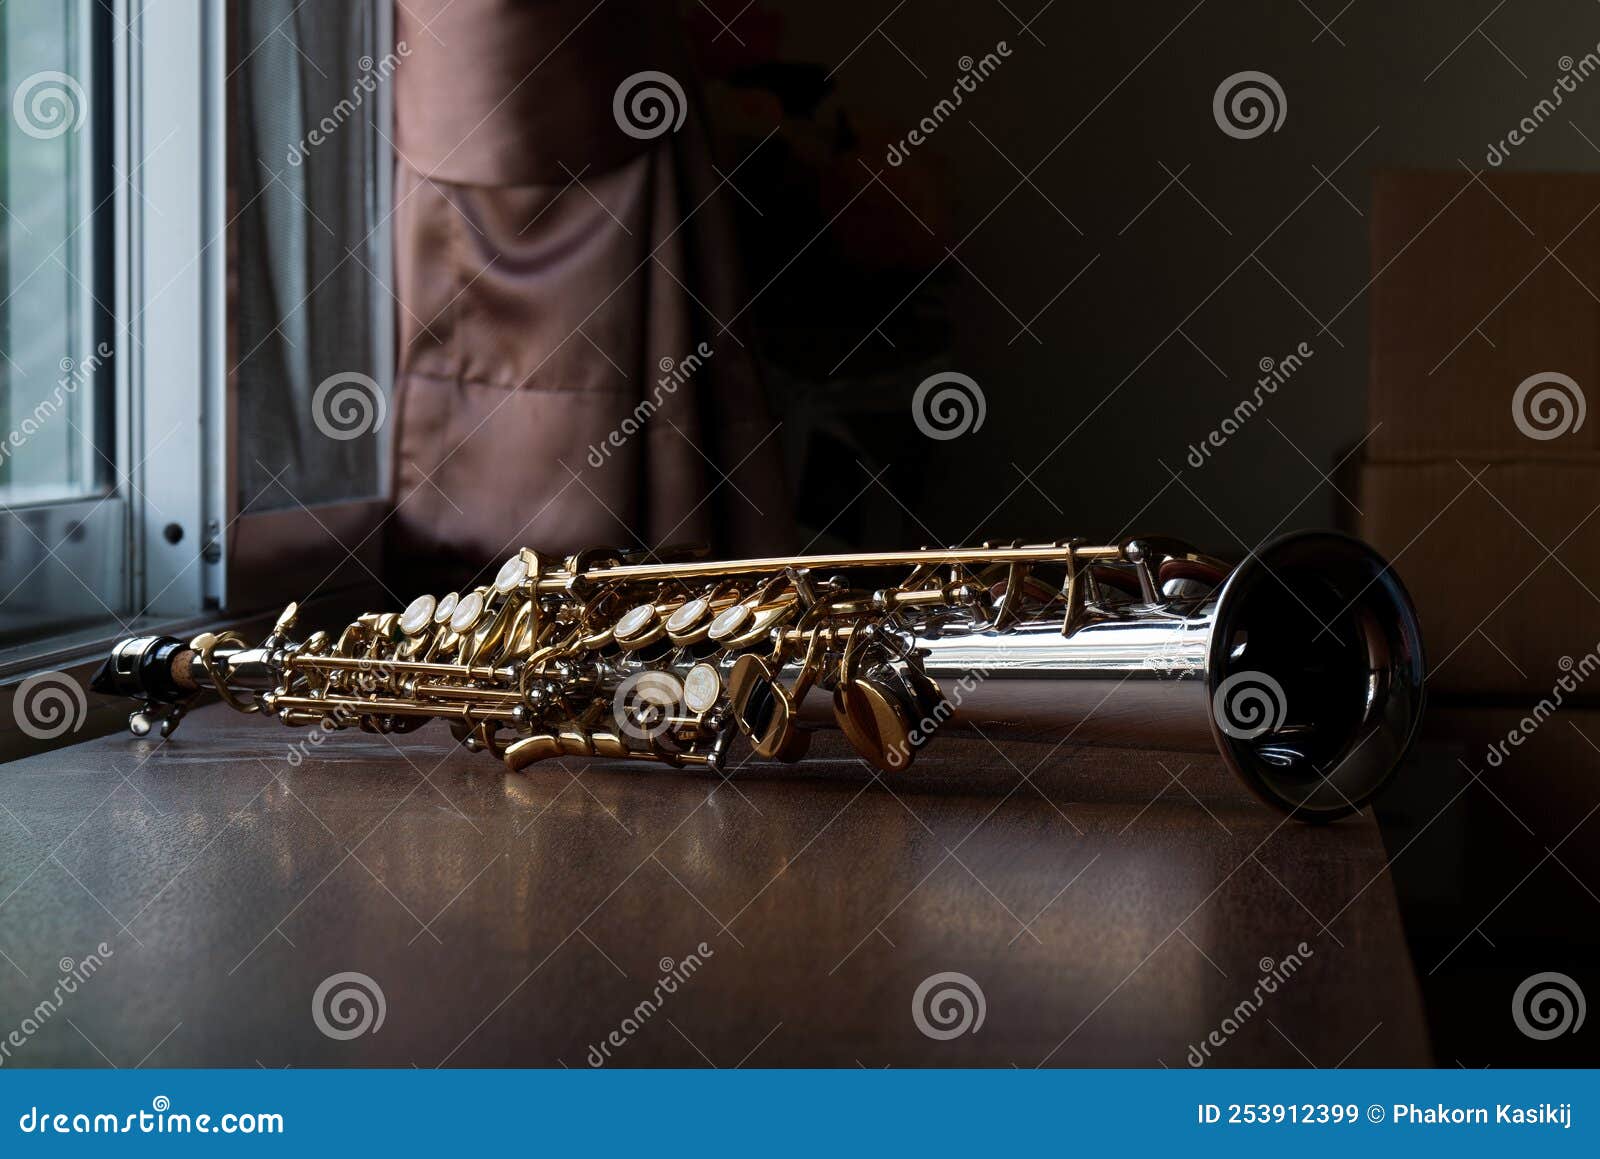 soprano saxophone mouthpiece, closeup woodwind instrumental equipment on blur saxophone background